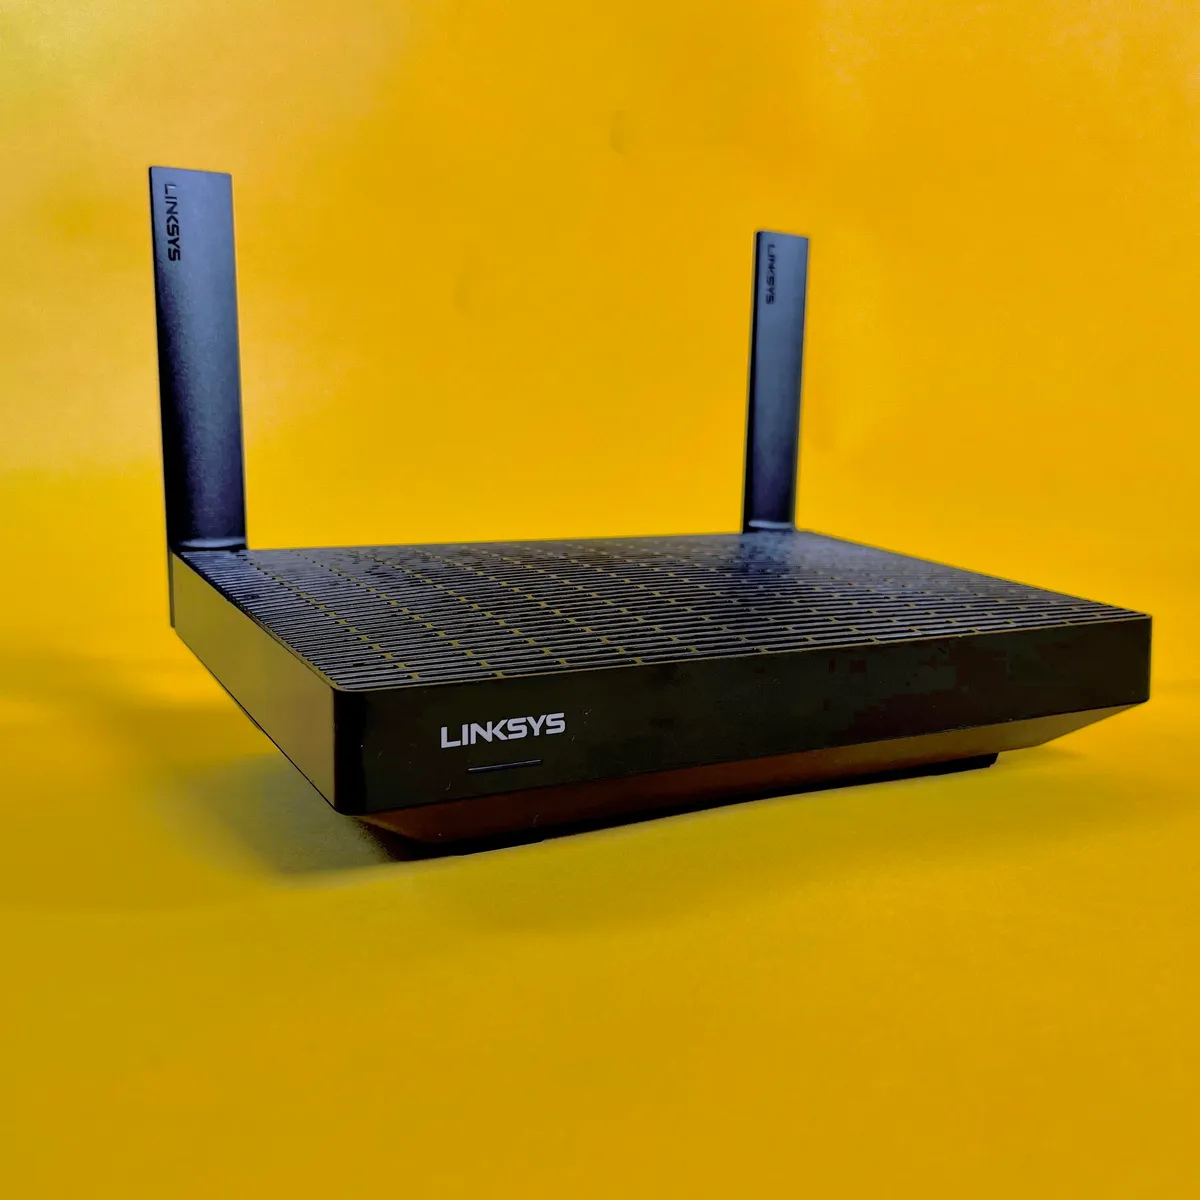 How Do I Setup A Linksys Wireless Router